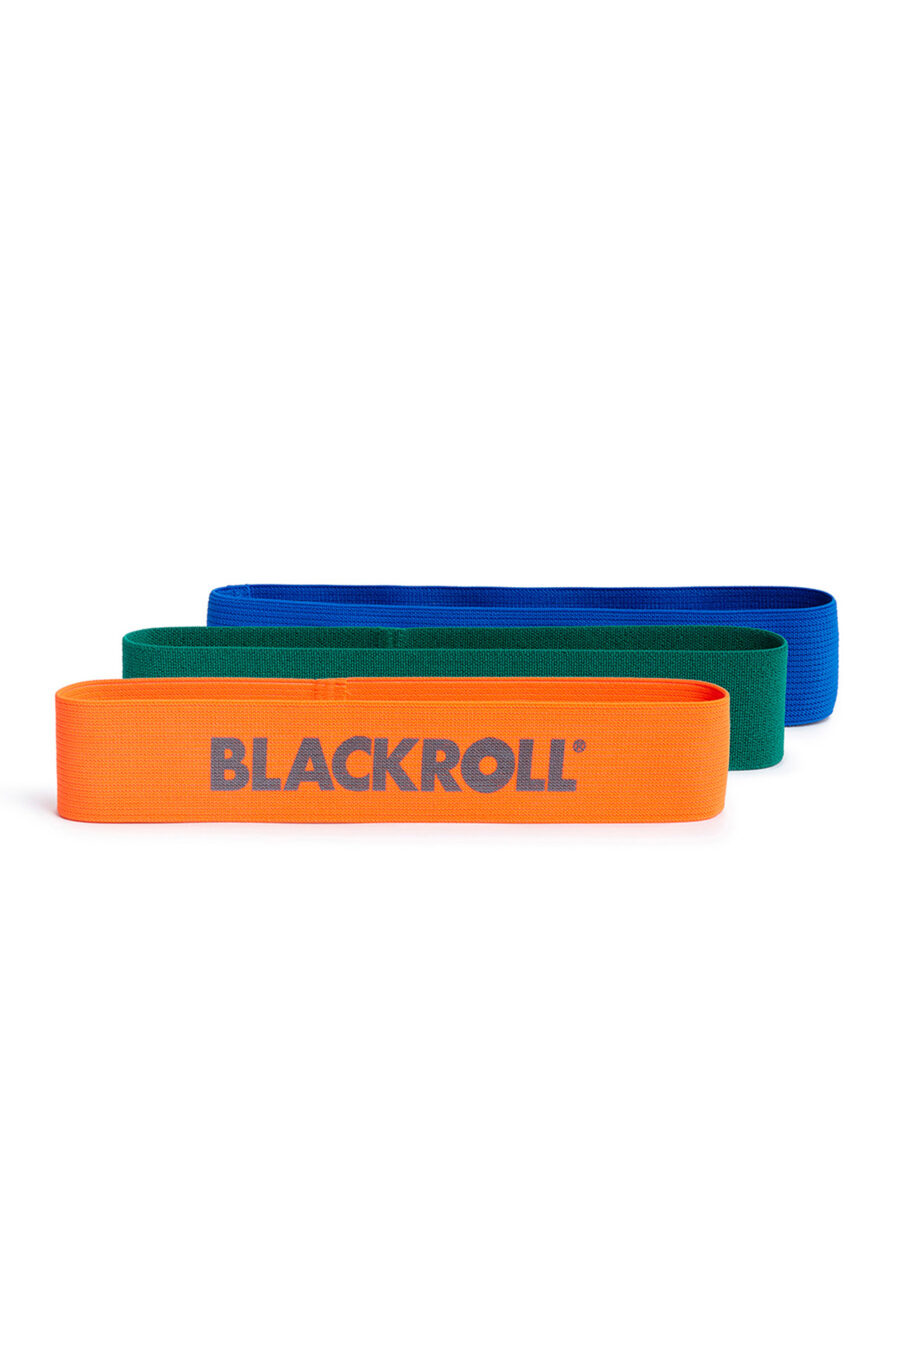 blackroll loop band 3er set stand training fengbao shop 1080 verpackung wien